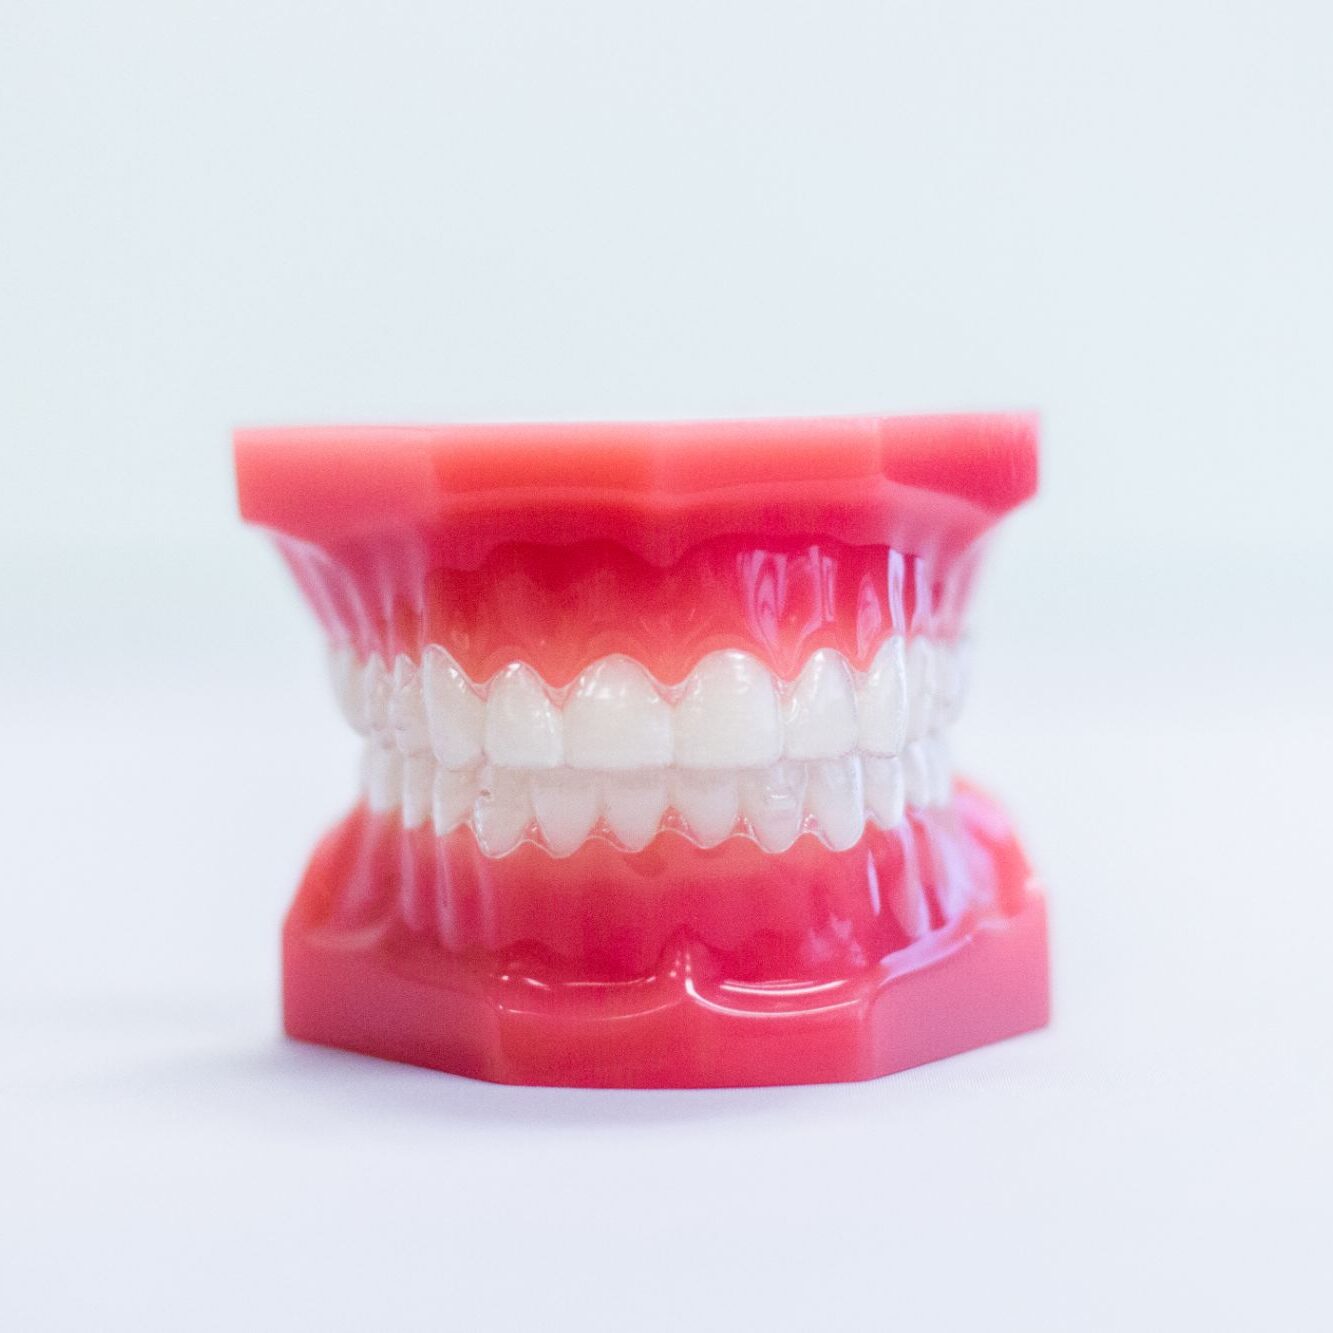 Invisalign aligners on a teeth mold